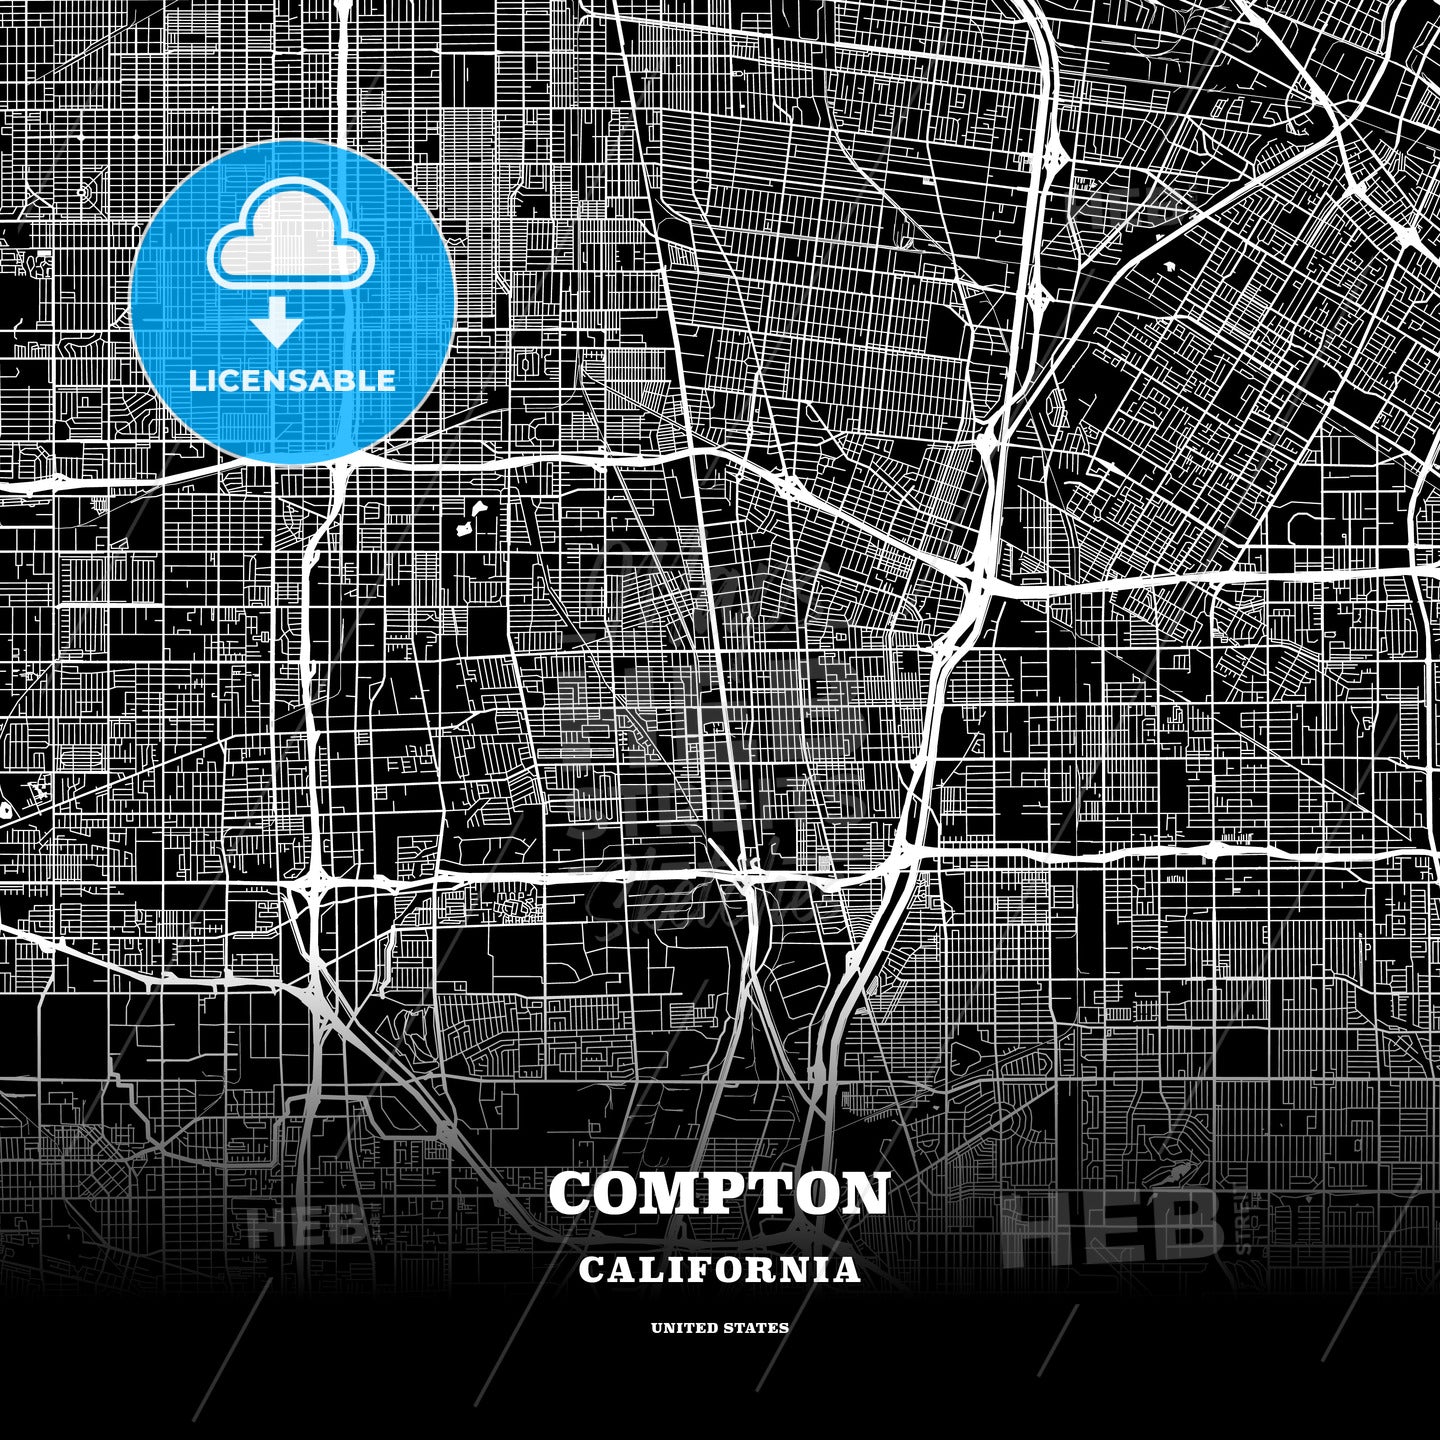 Compton, California, USA map